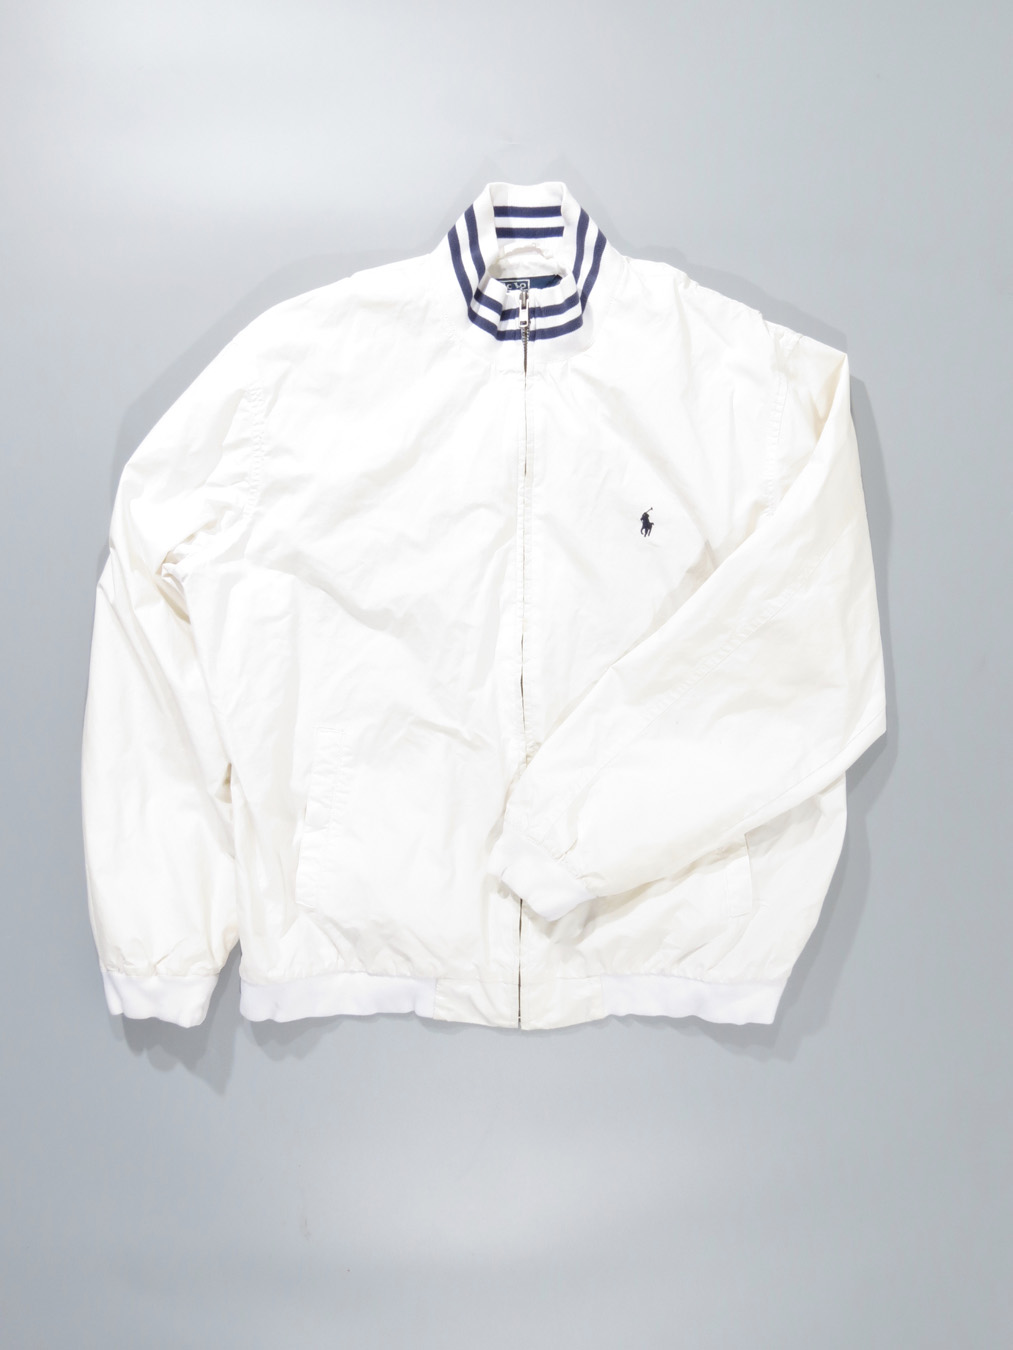 polo ralph lauren jacket white